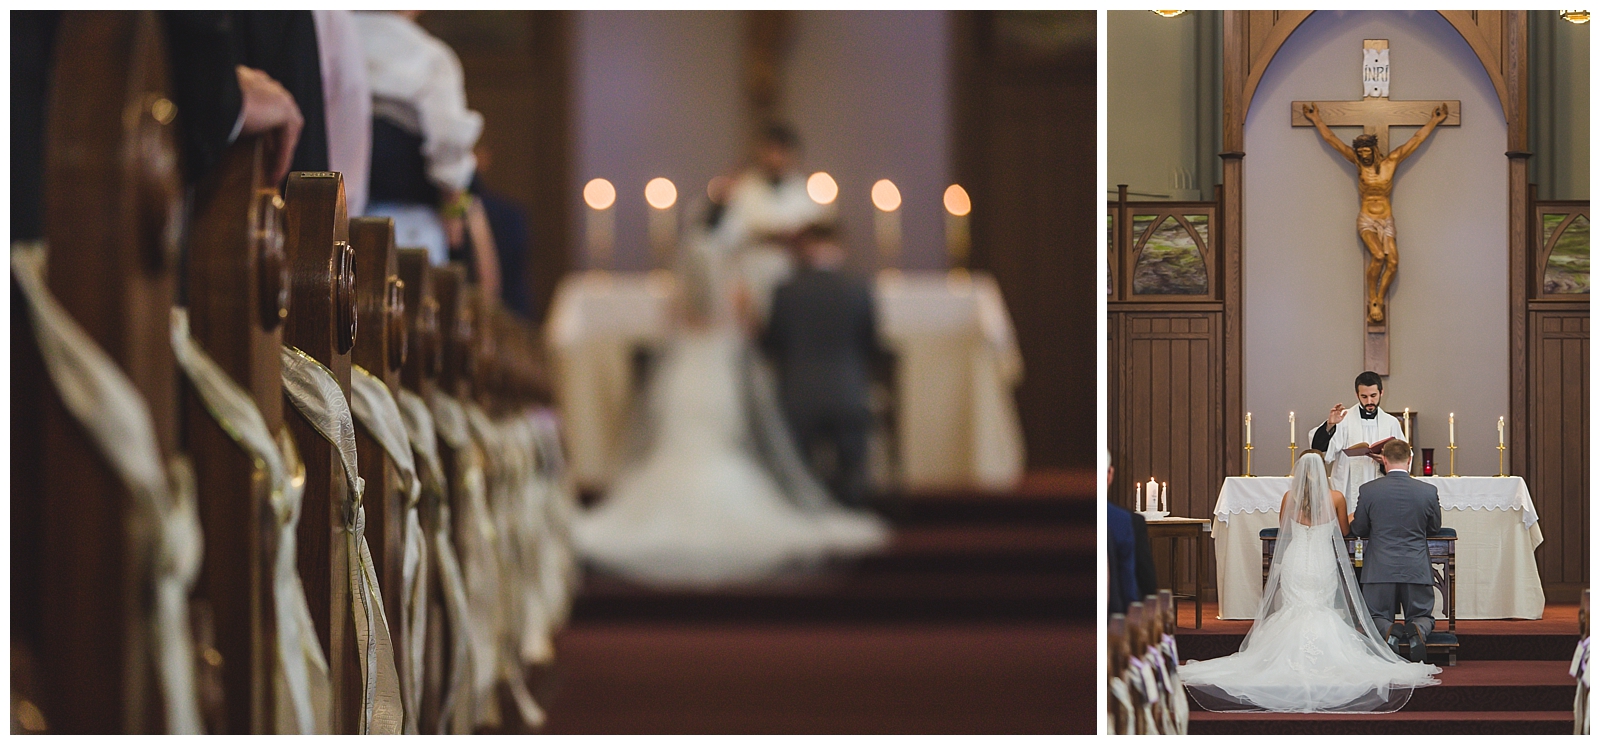 Wedding photography at Guardian Angels Parish by Kansas City wedding photographers Wisdom-Watson Weddings.